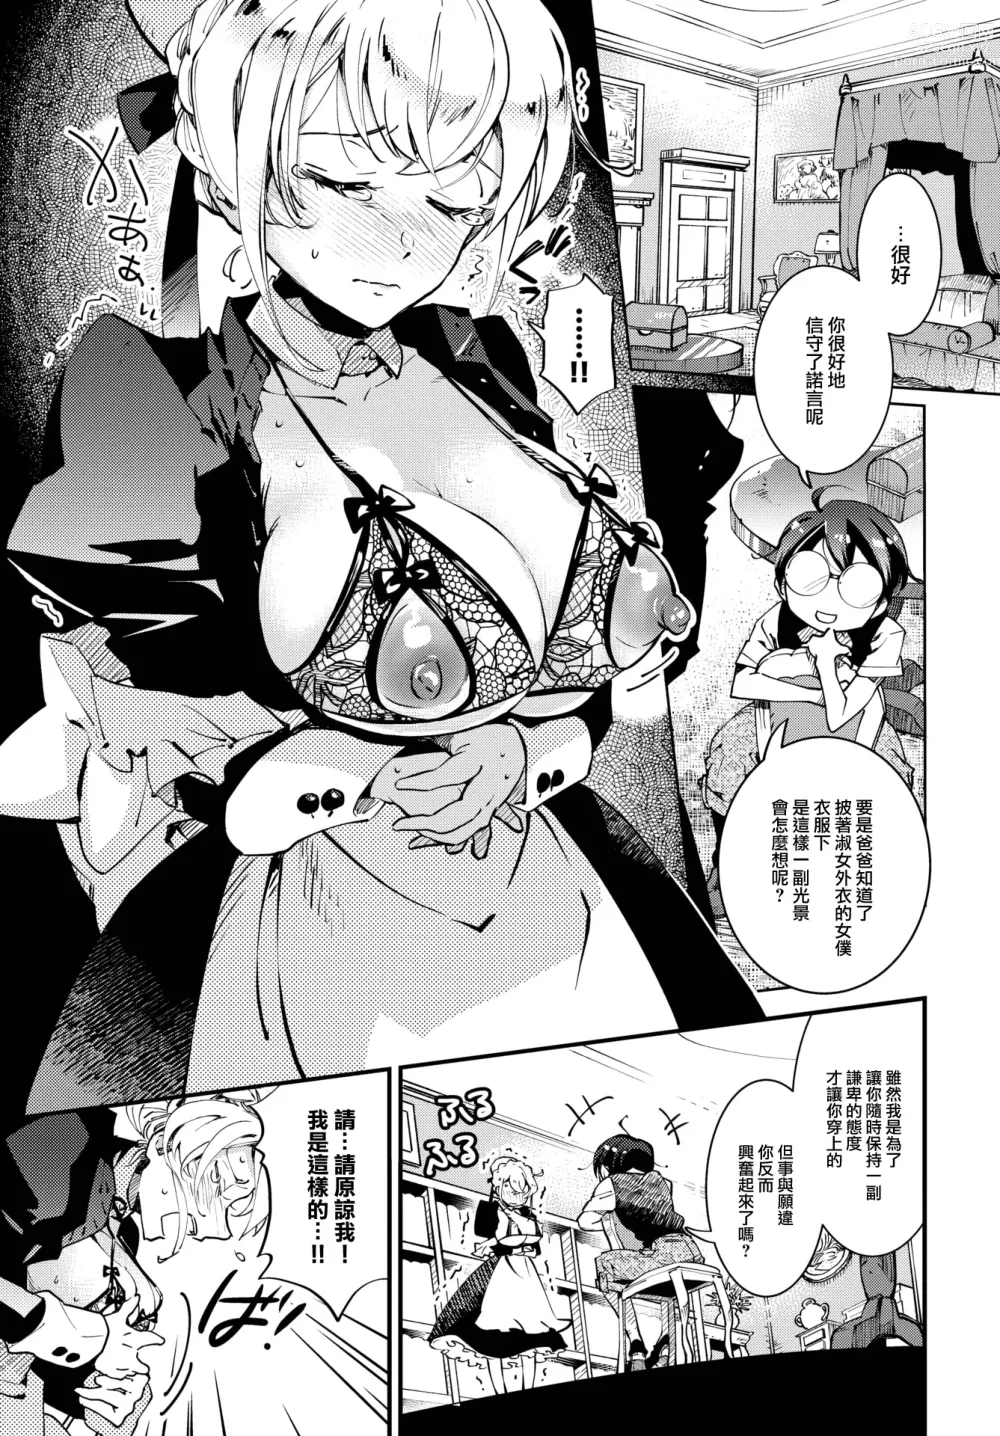 Page 4 of manga Beloved Maid Garden